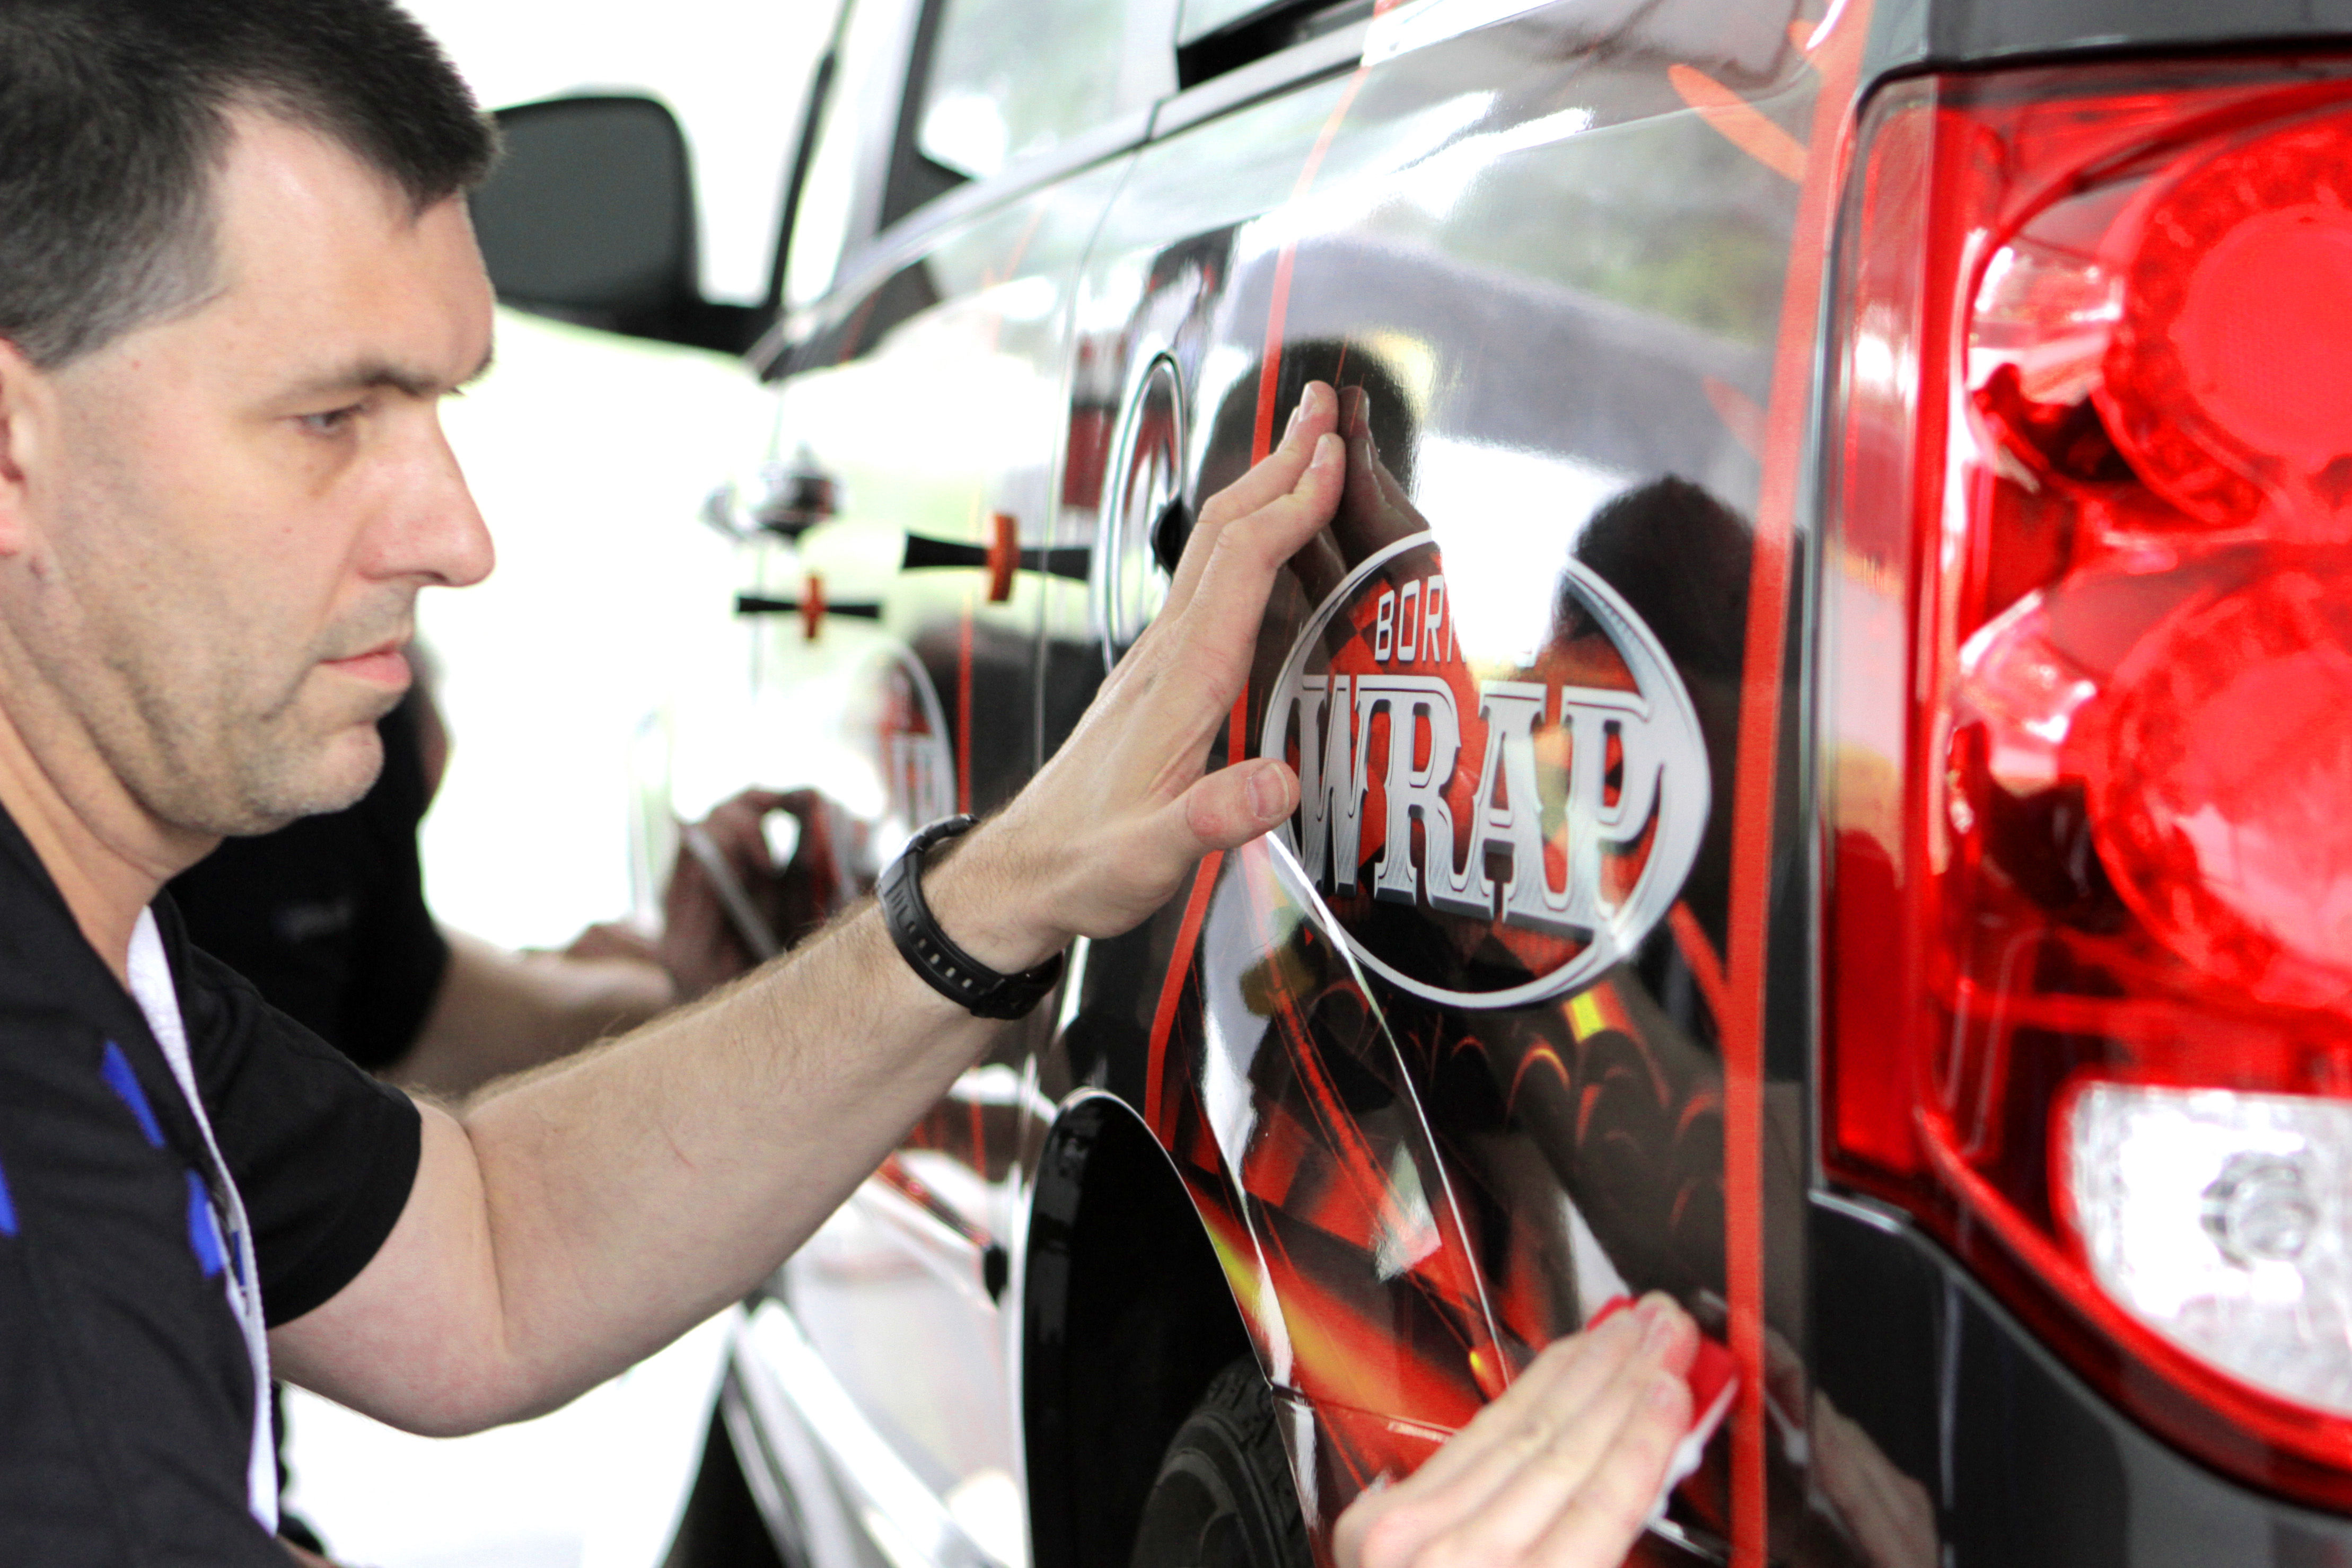 Roland DG anuncia su expandido calendario 2019 Born-To-Wrap de talleres de rotulación de vehículos.